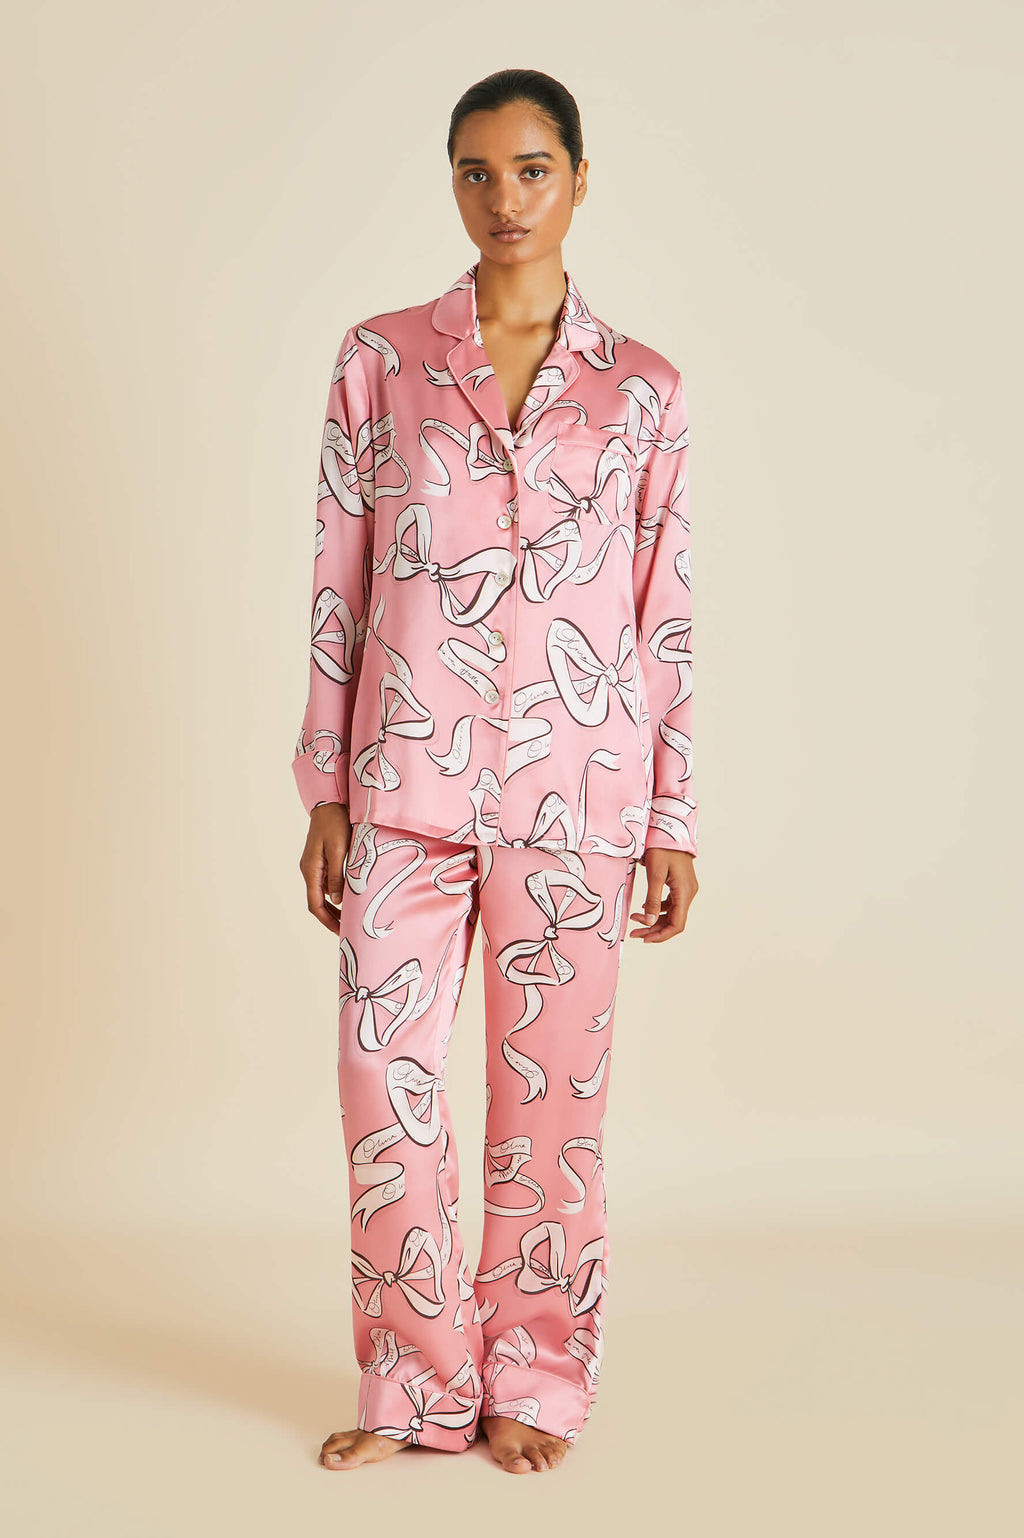 OVH Lila Arran Bow Silk Satin Pajamas Set